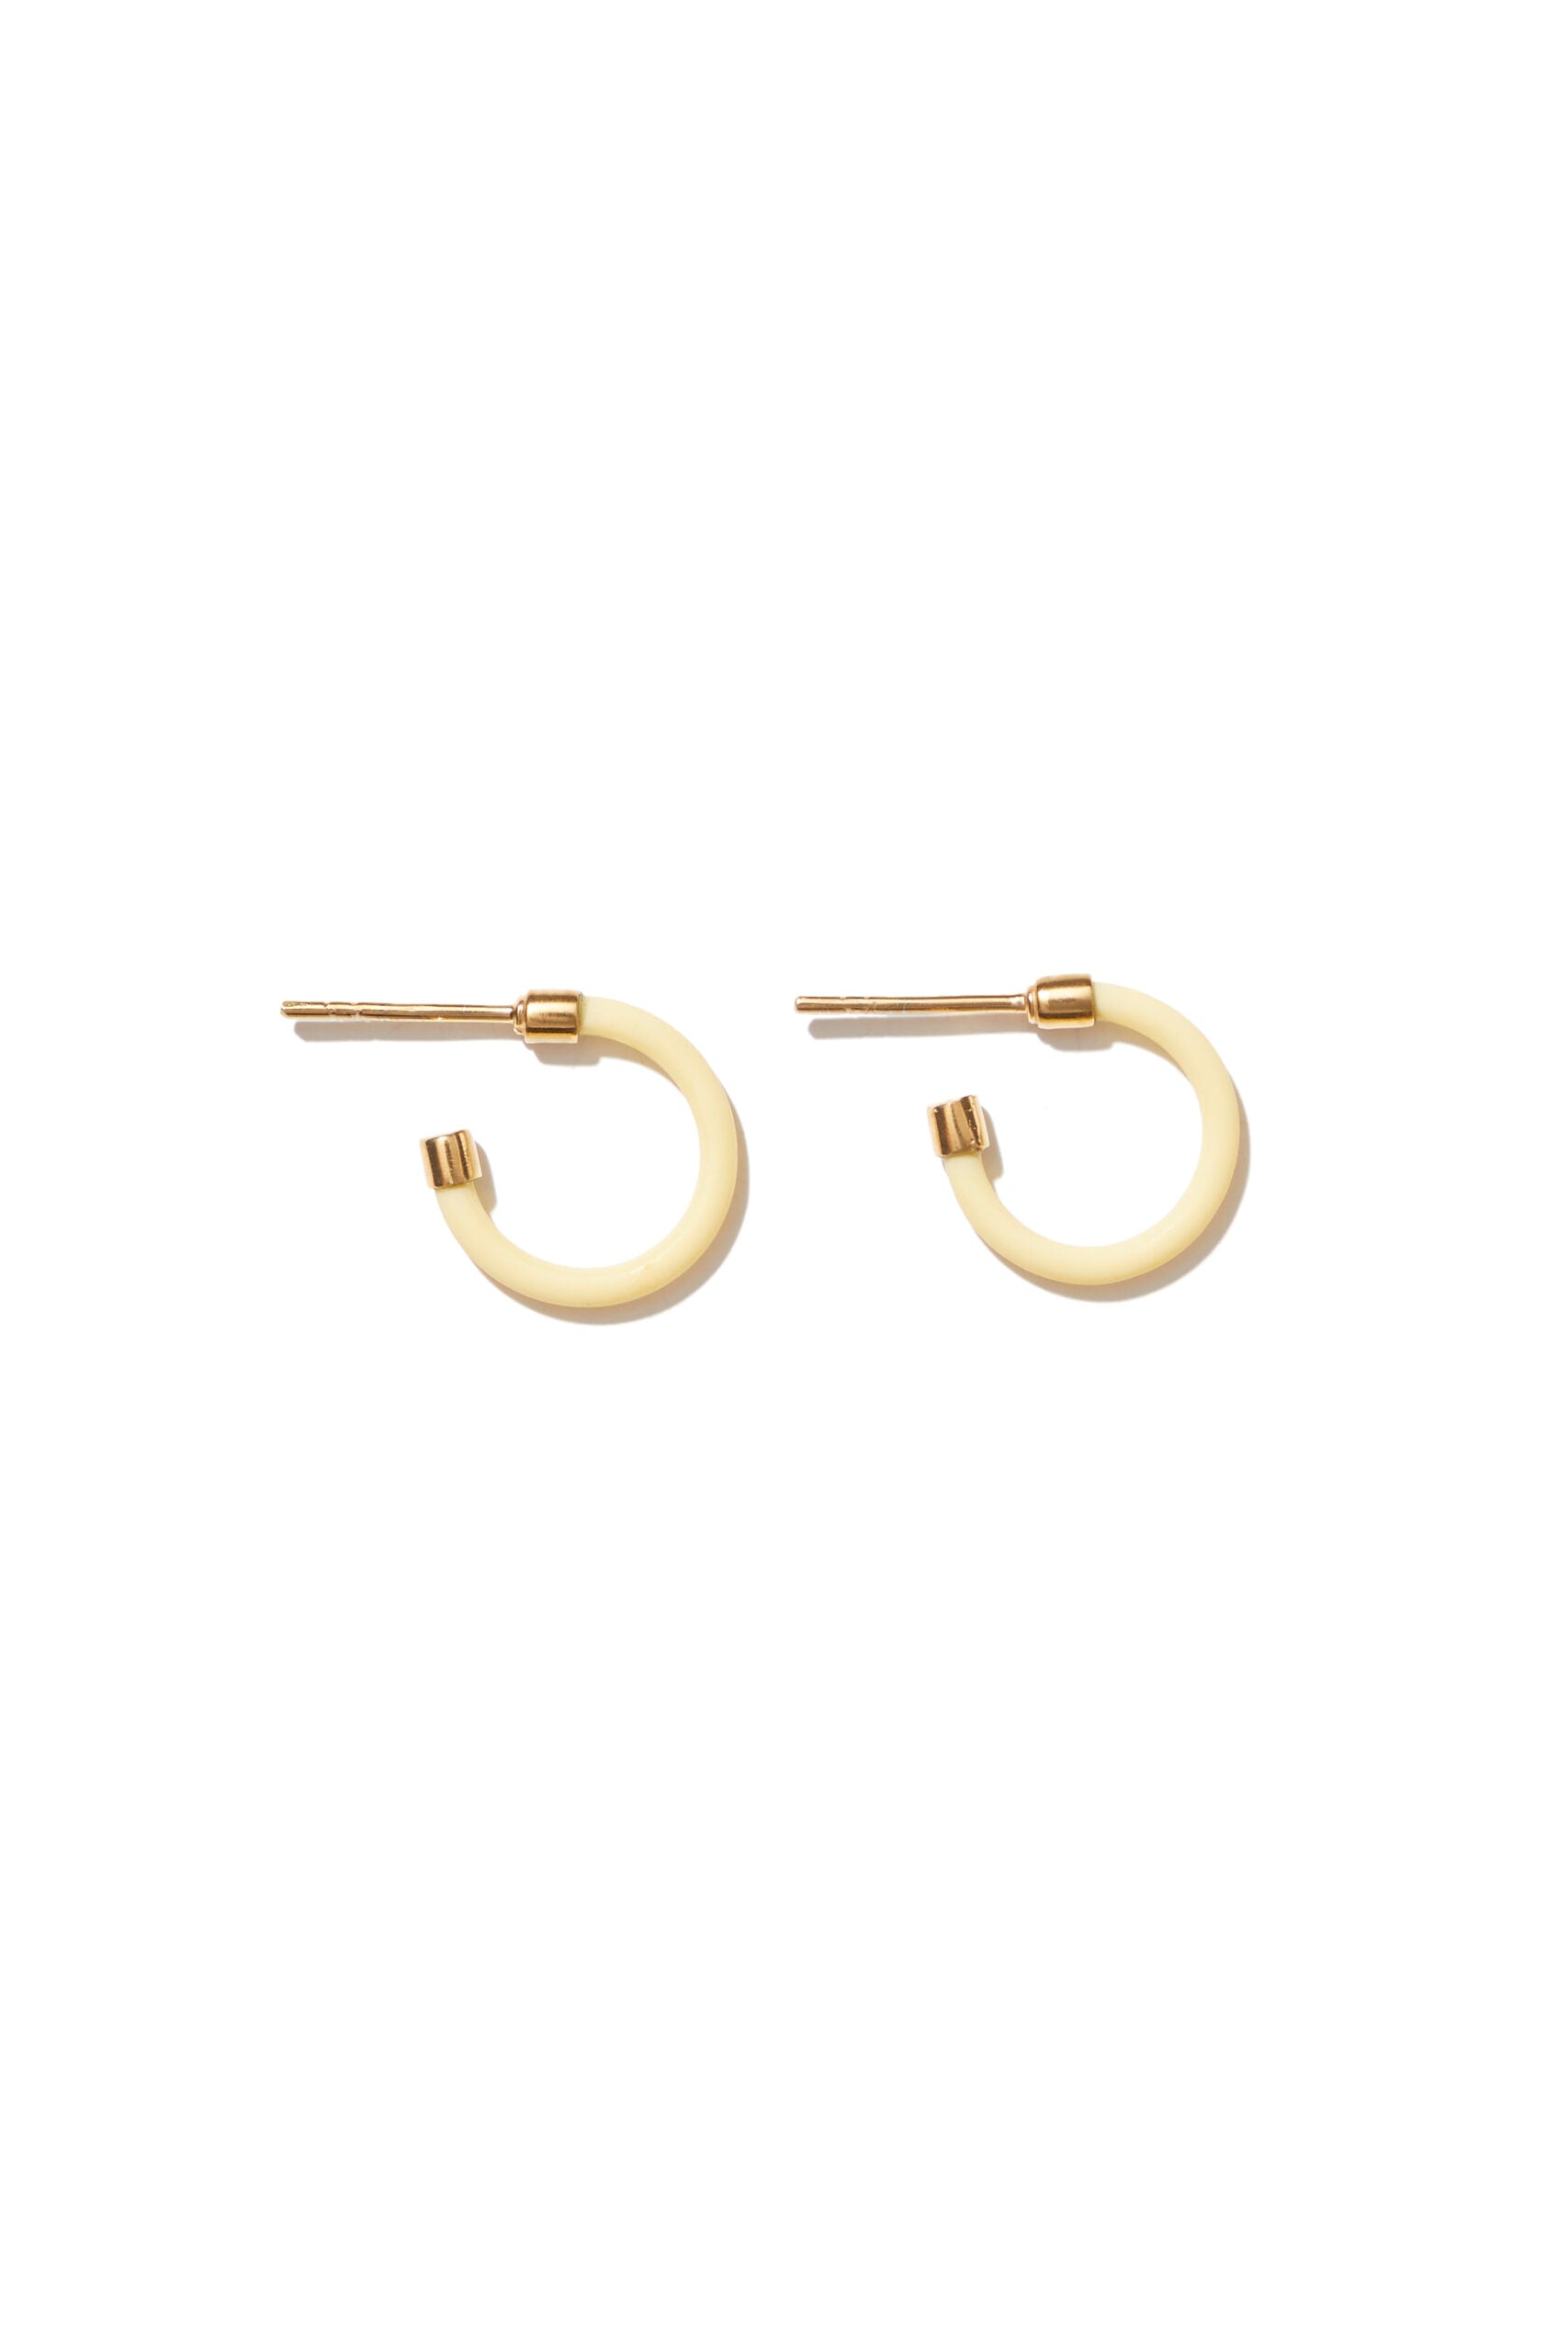 Stevie earrings